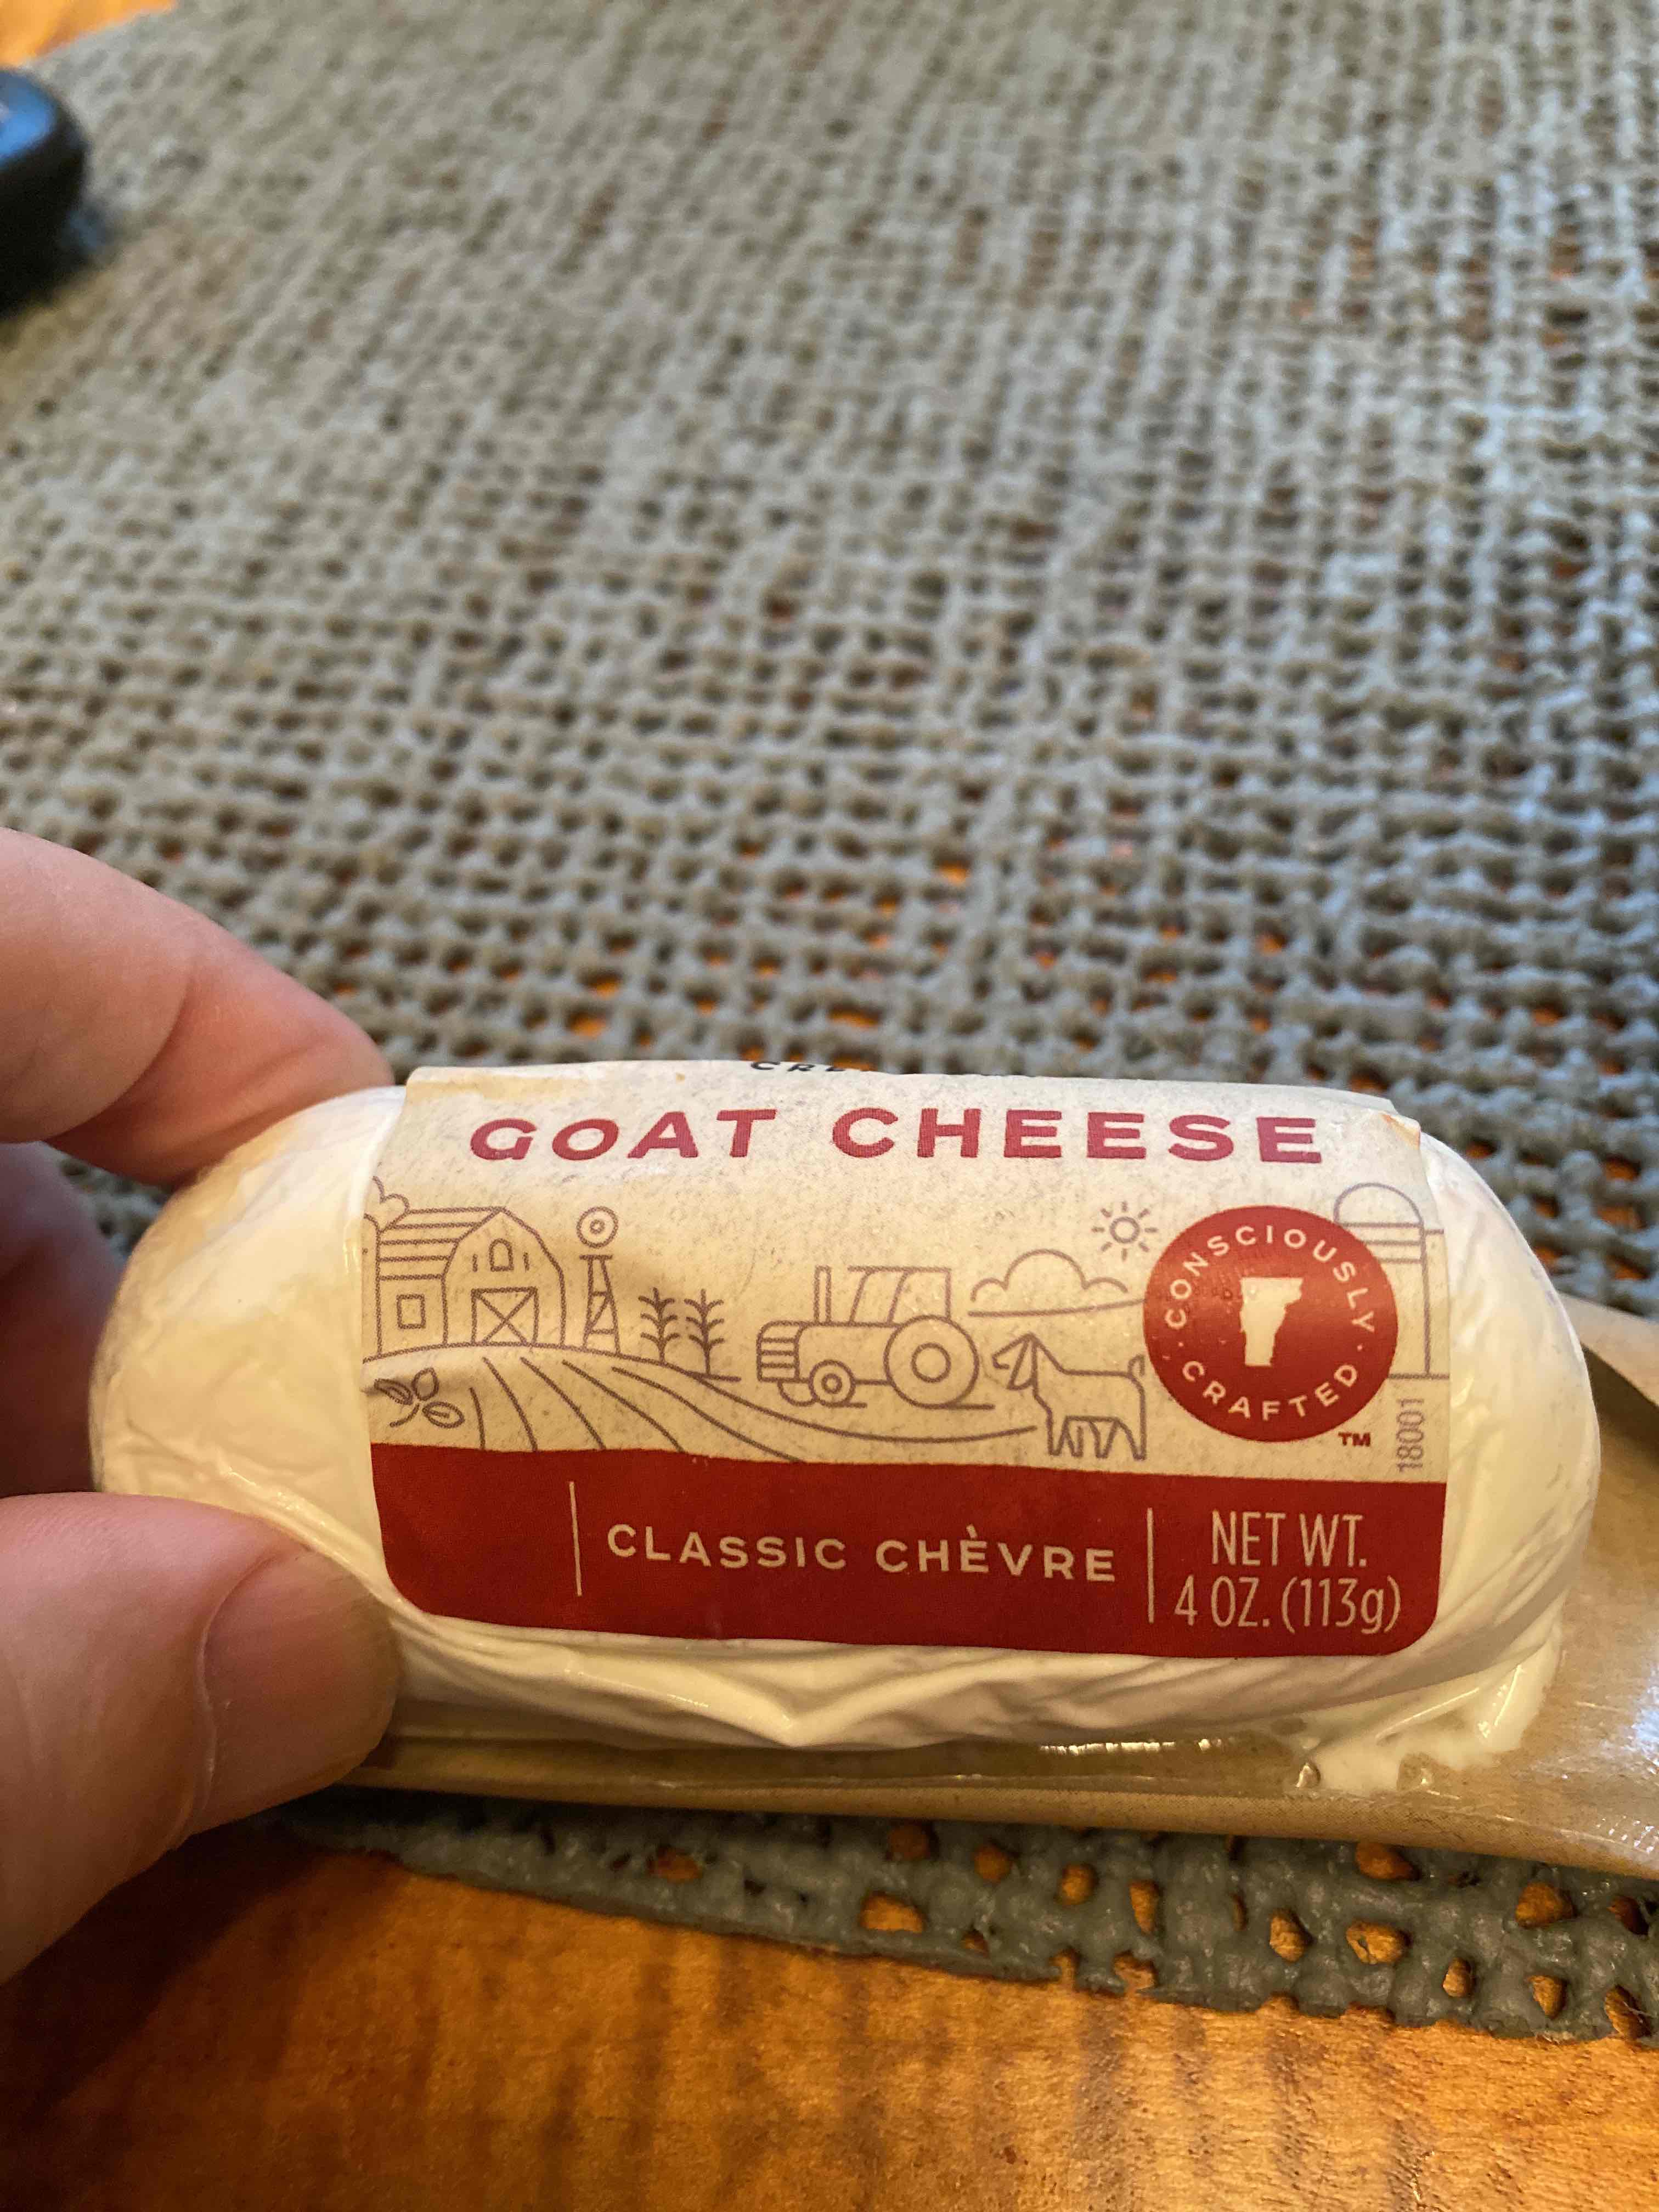 Goat cheese classic chèvre